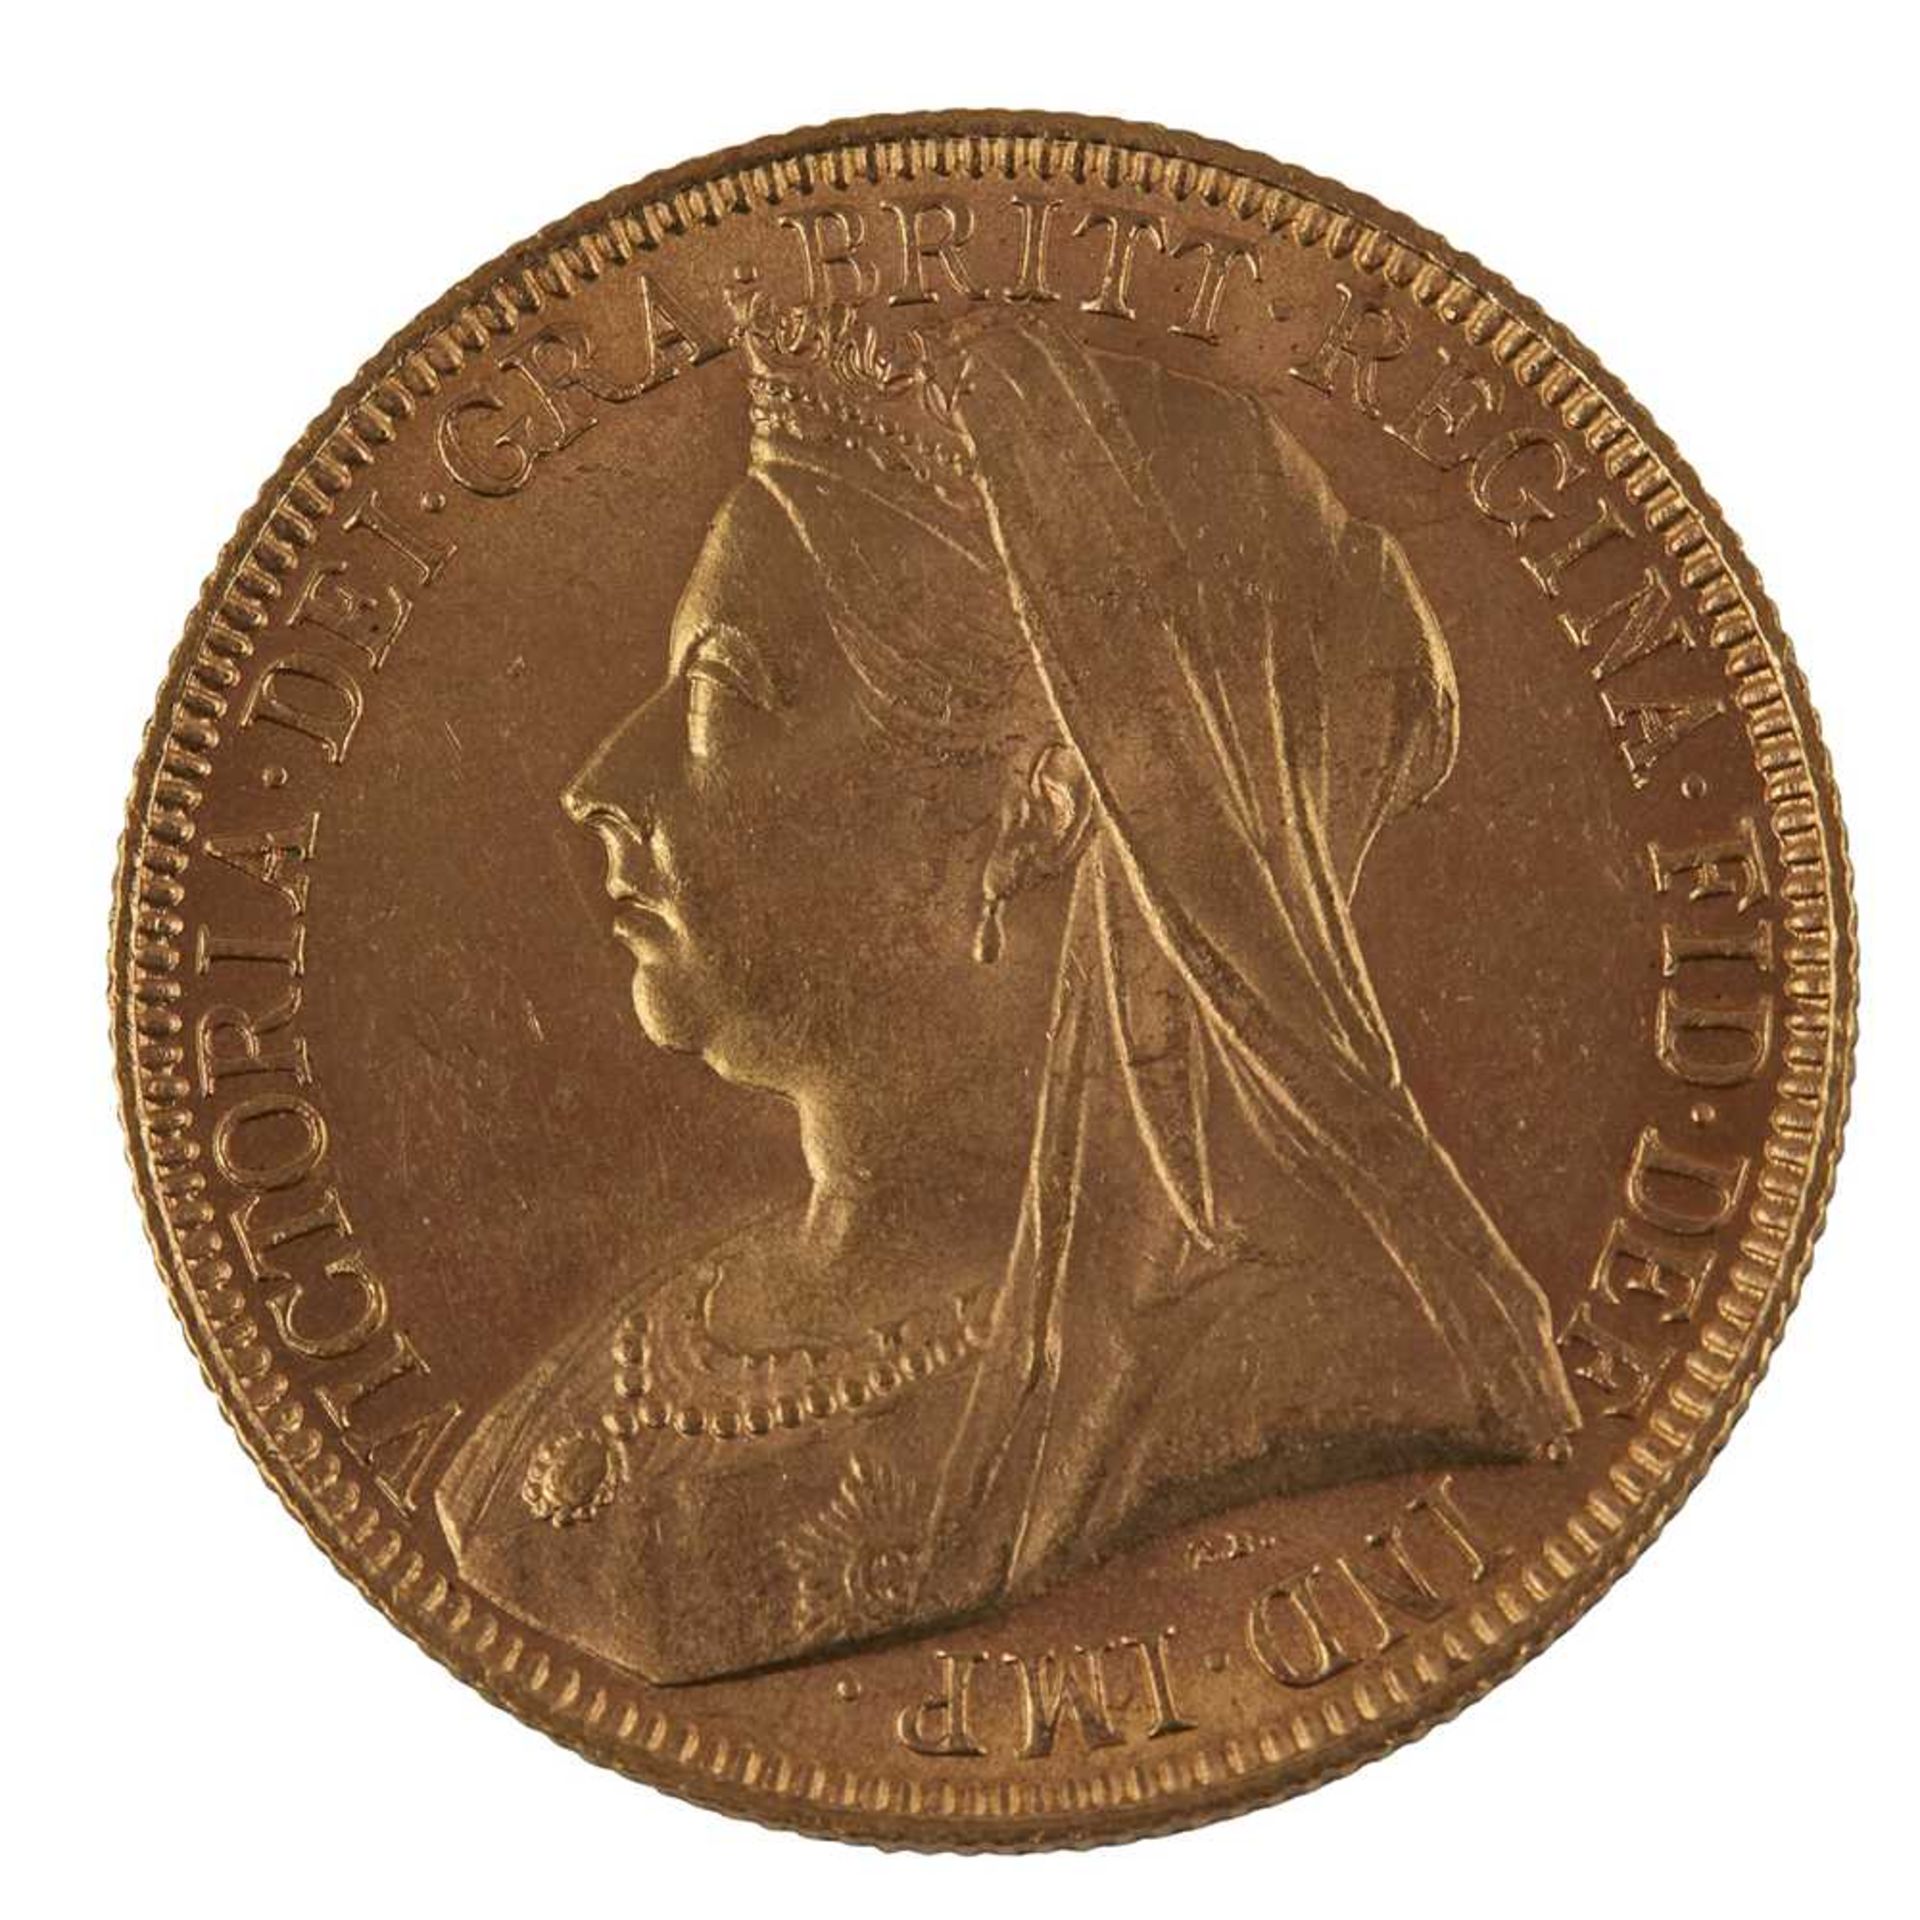 A Victorian £2 coin